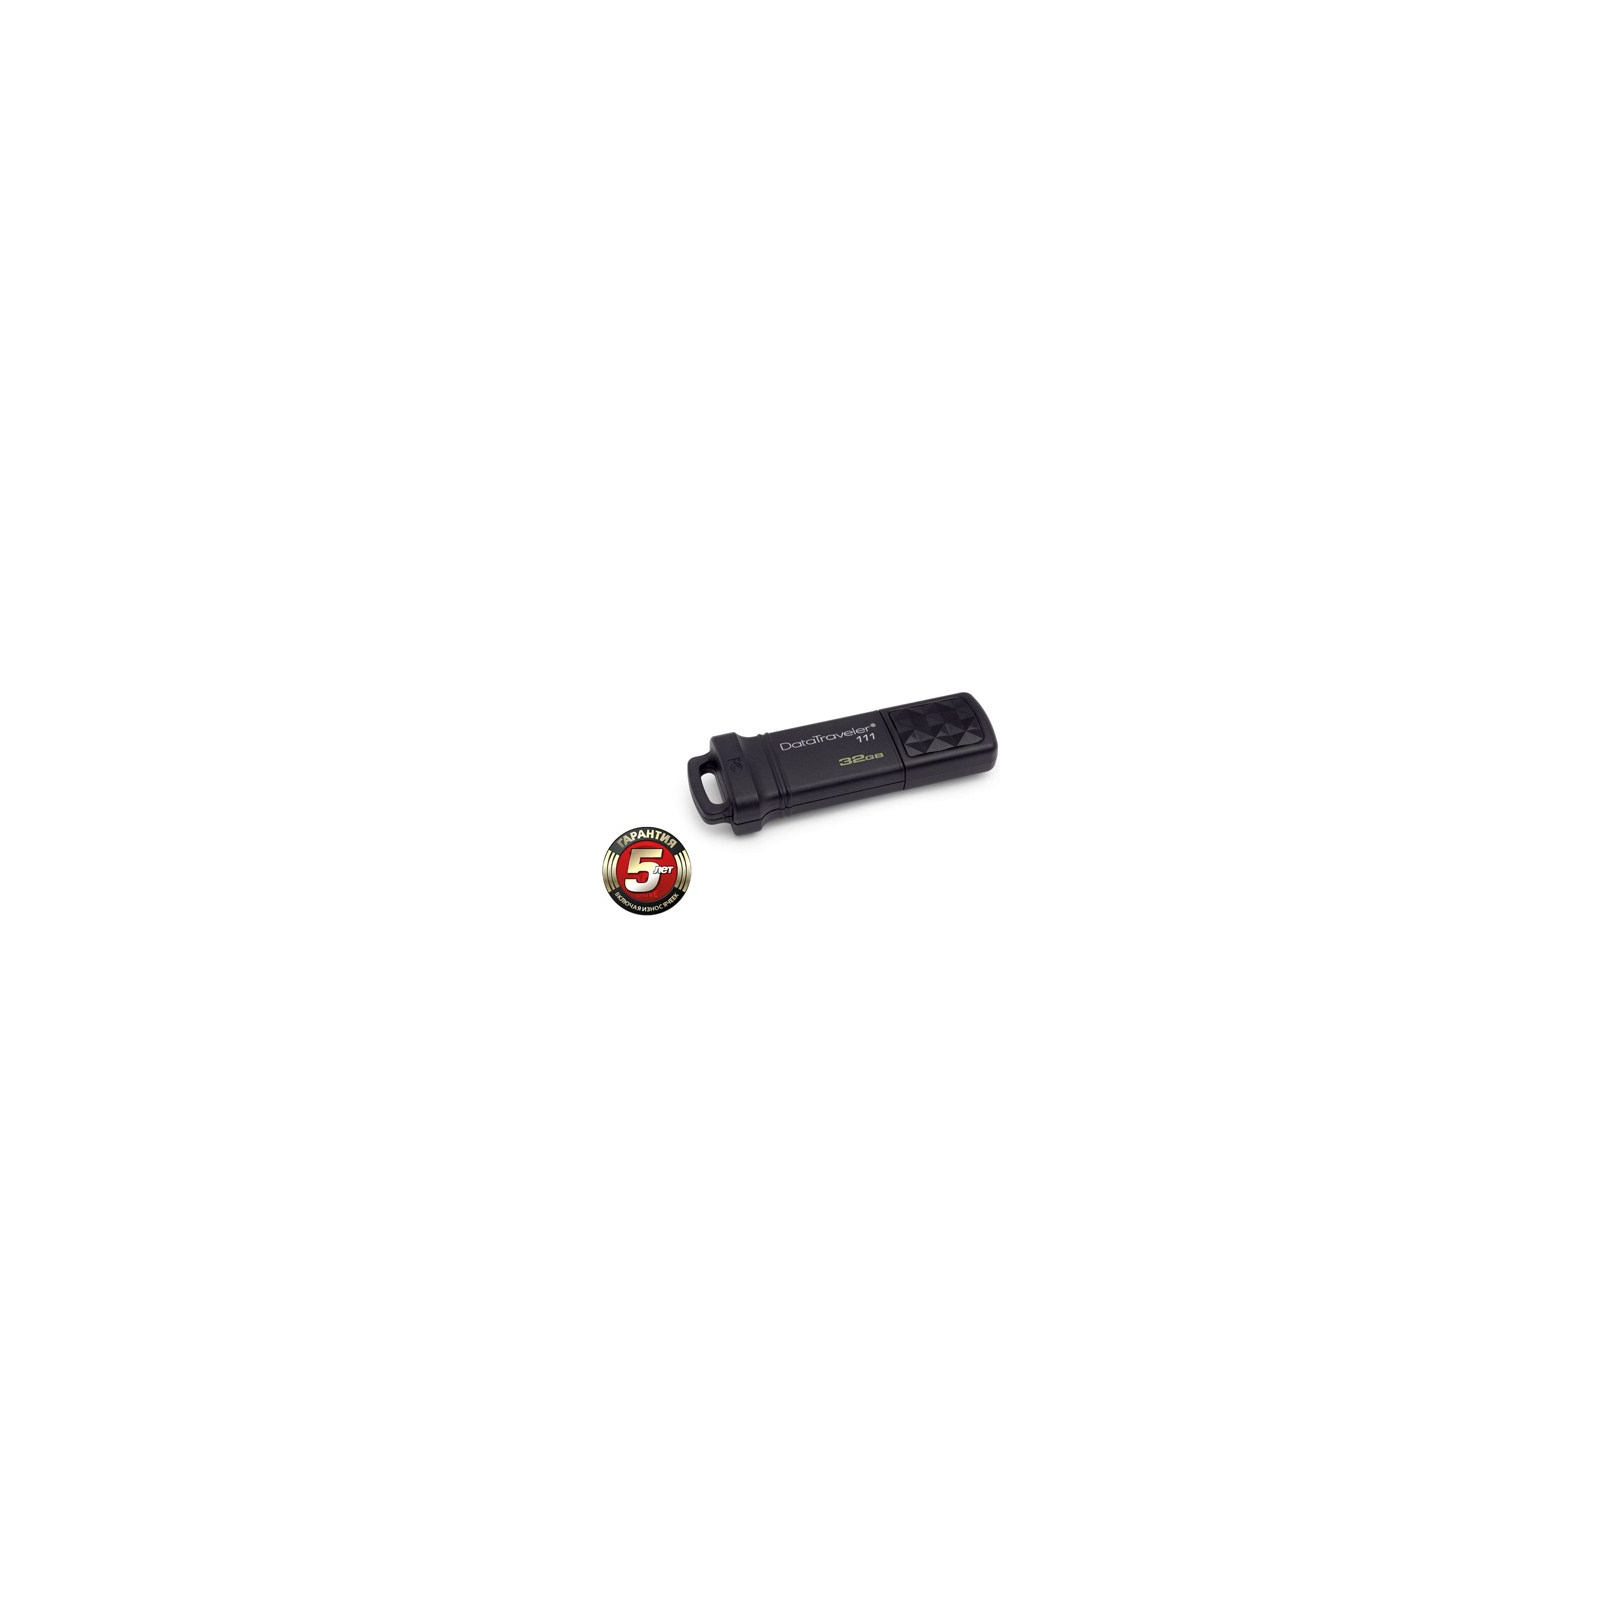 USB флеш накопитель Kingston 32Gb DataTraveler DT111 Black (DT111/32GB)